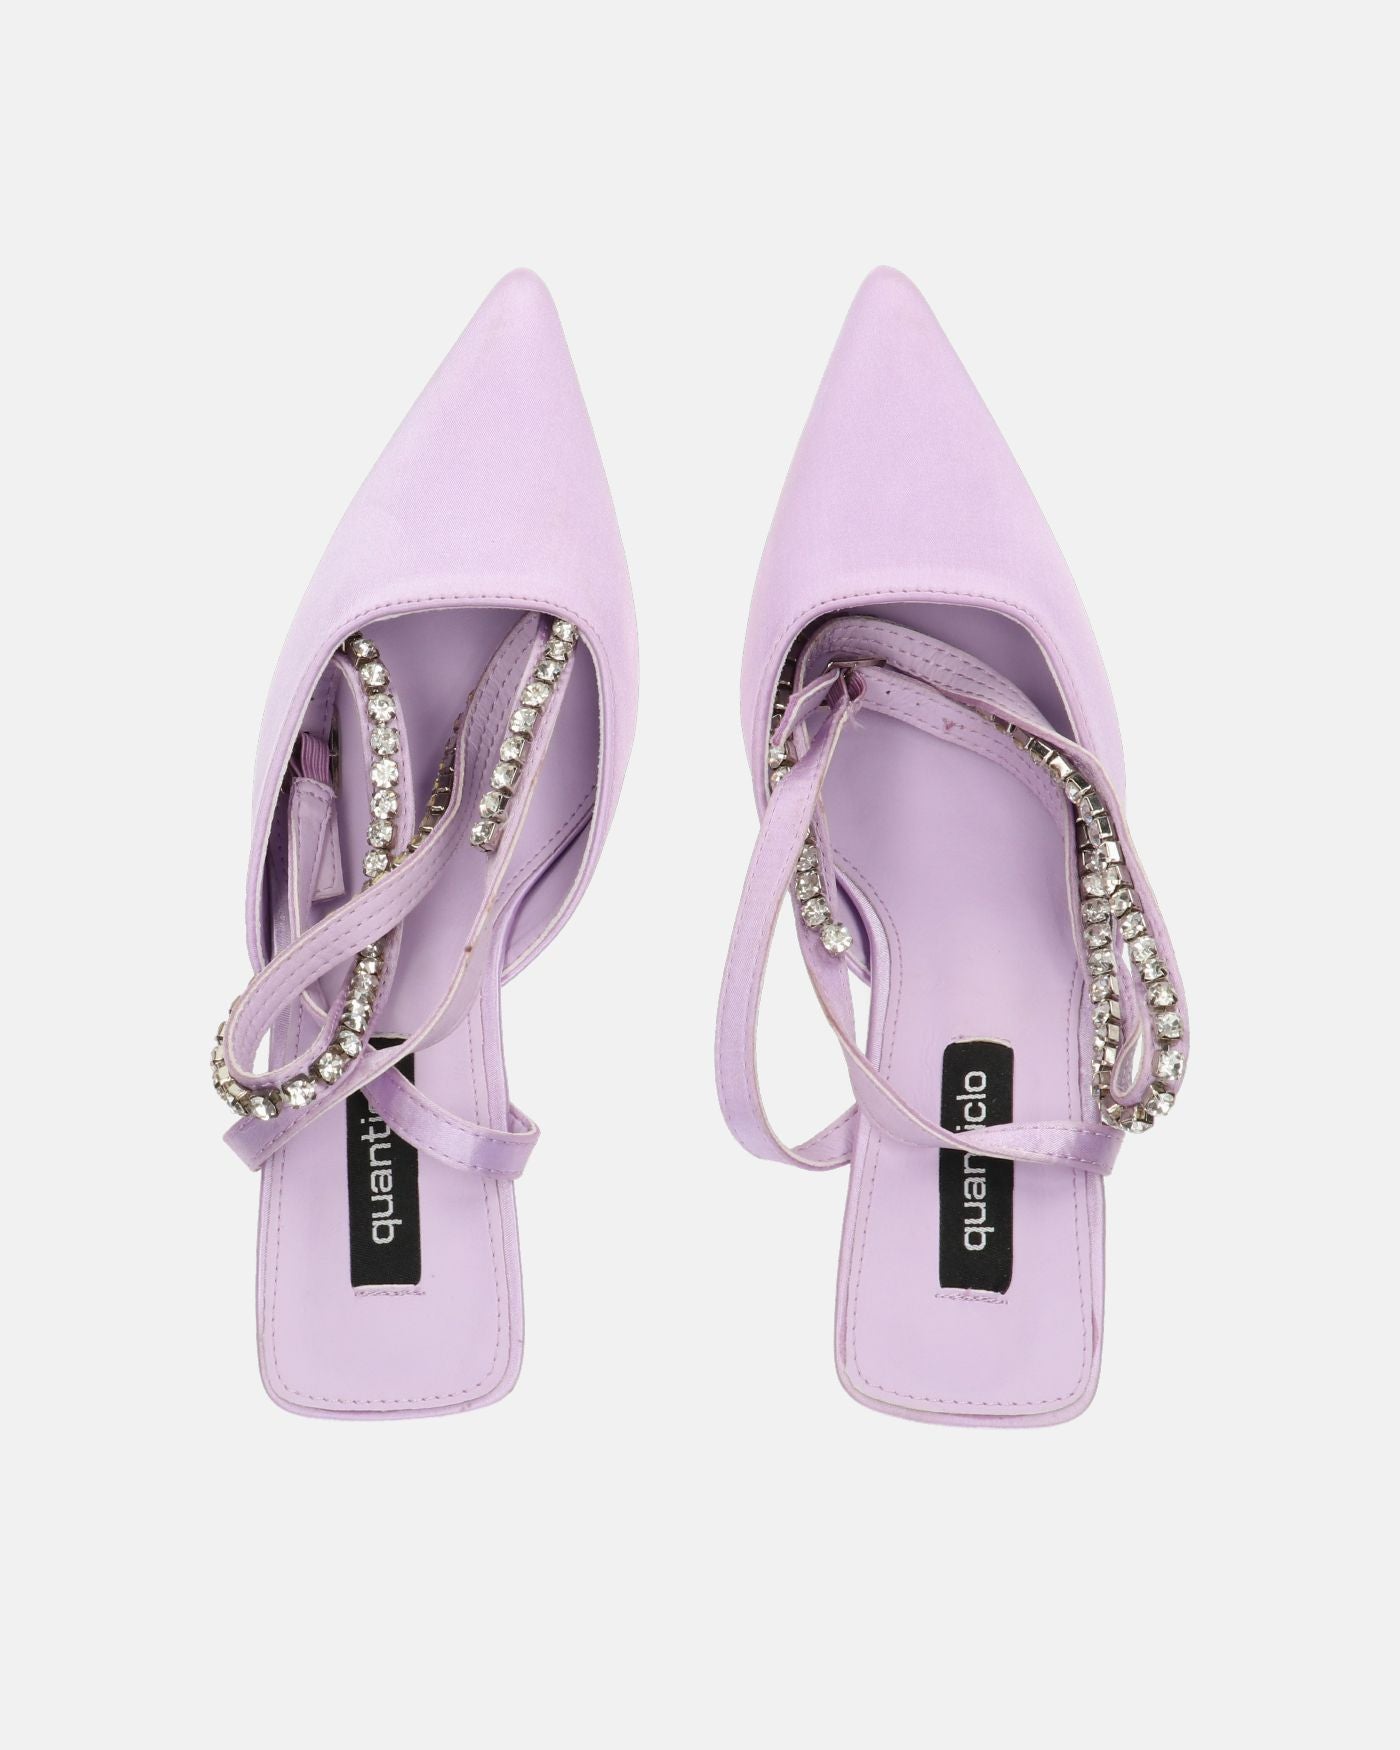 DORIS - heeled shoes in violet lycra and gems on the strap